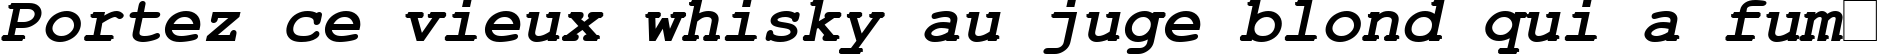 Пример написания шрифтом Courier New Cyr Bold Italic текста на французском